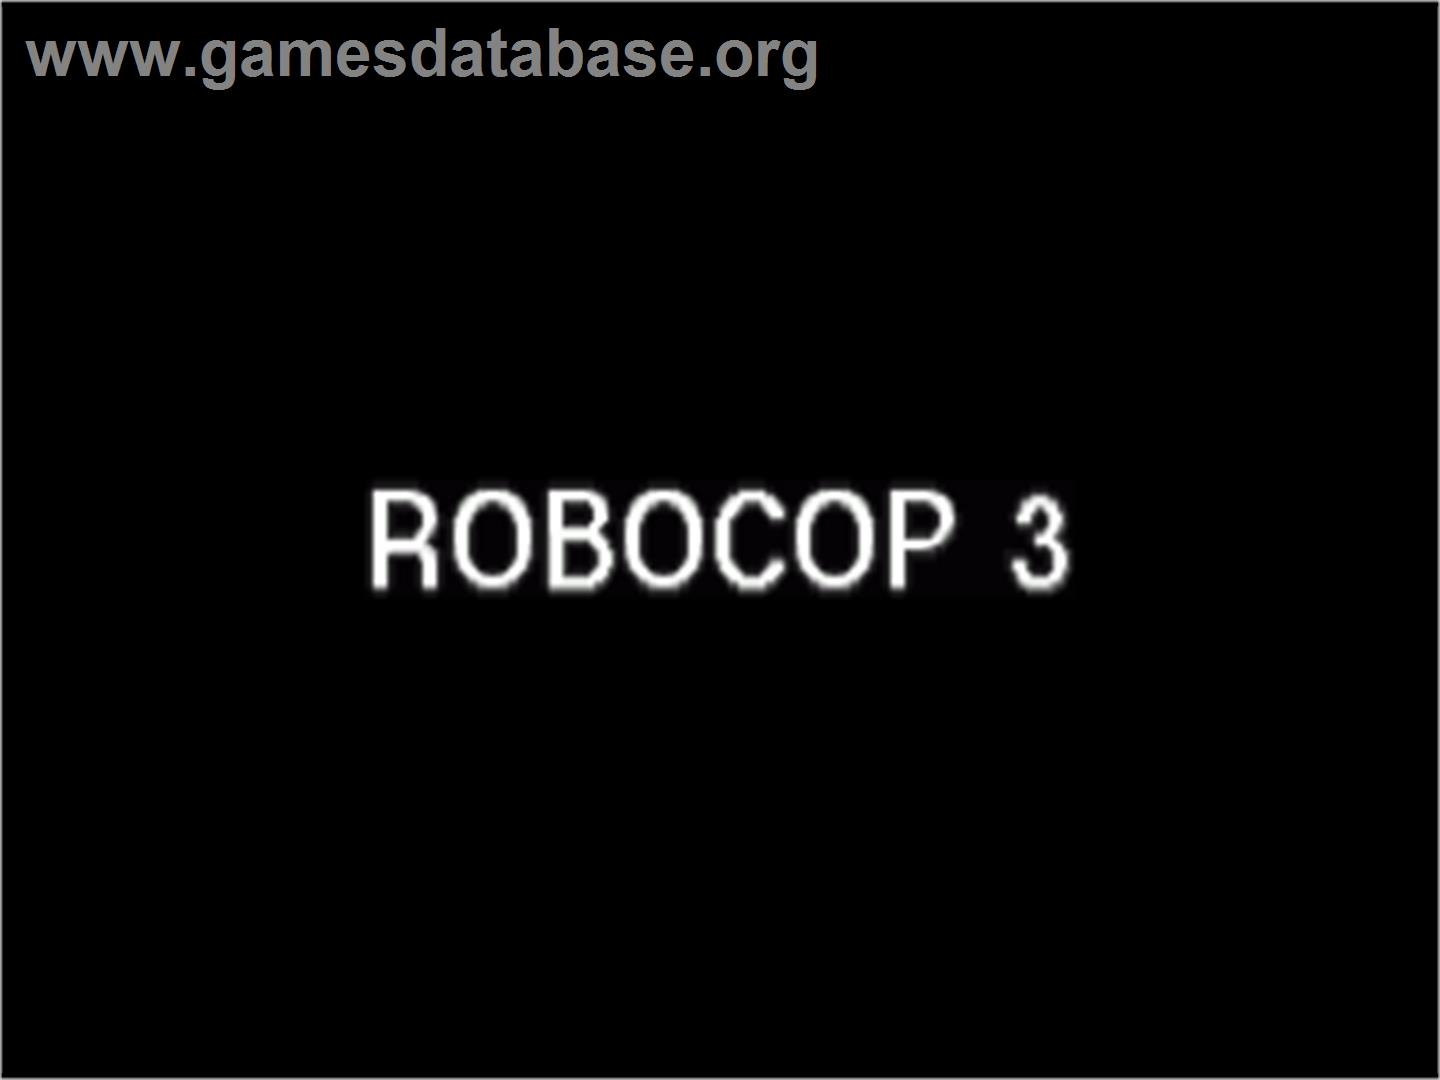 Robocop 3 - Commodore Amiga - Artwork - Title Screen